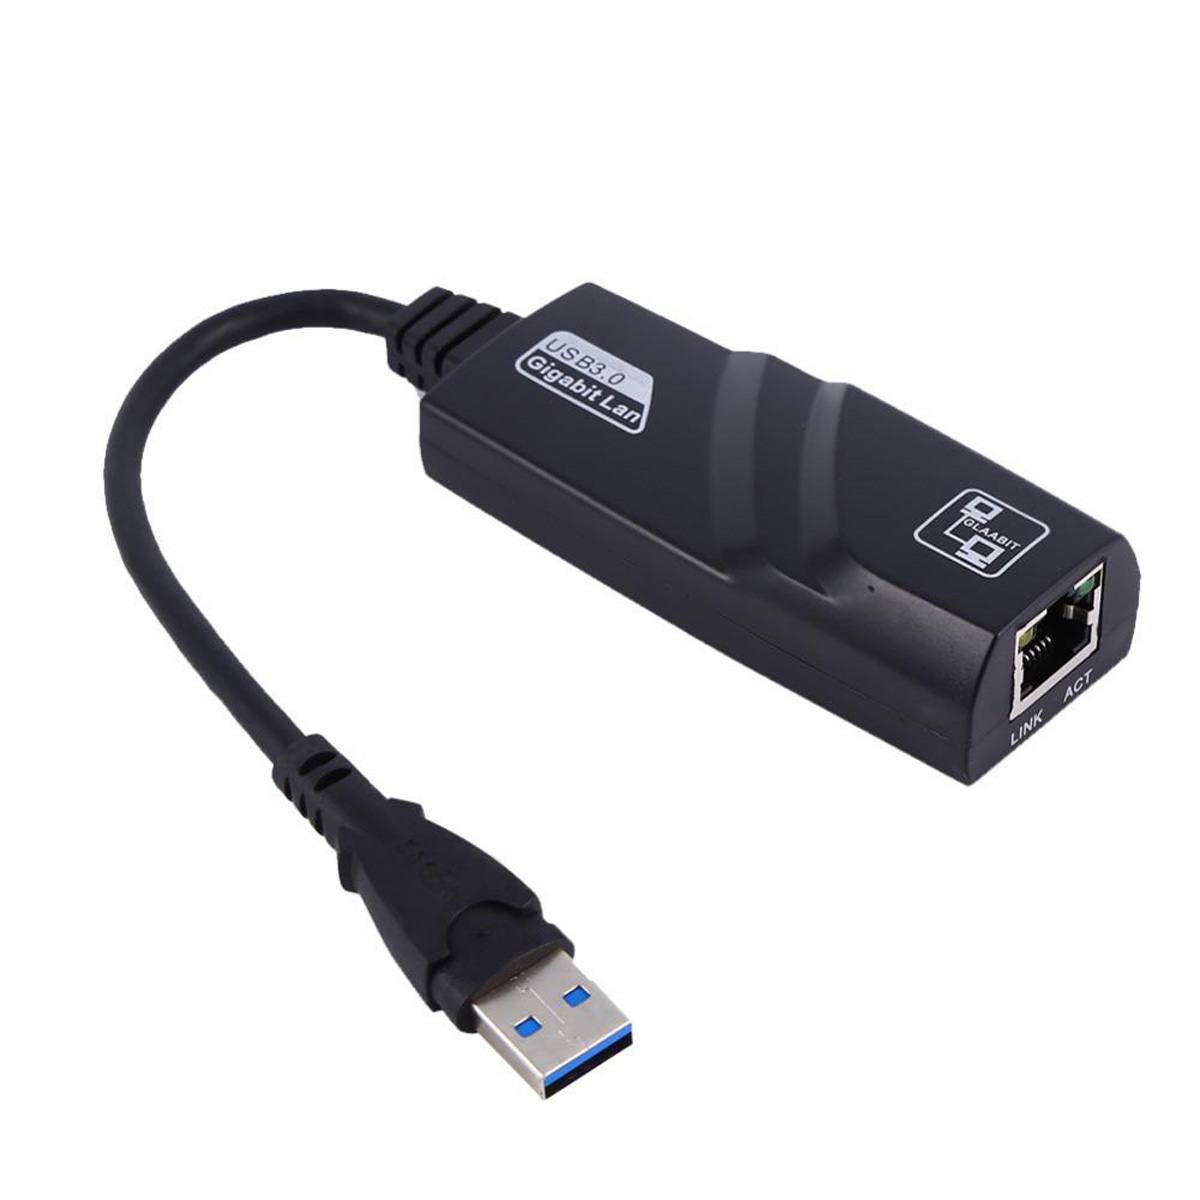 USB 3.0 to LAN Gigabit Ethernet Adapter 10/100/1000Mbps